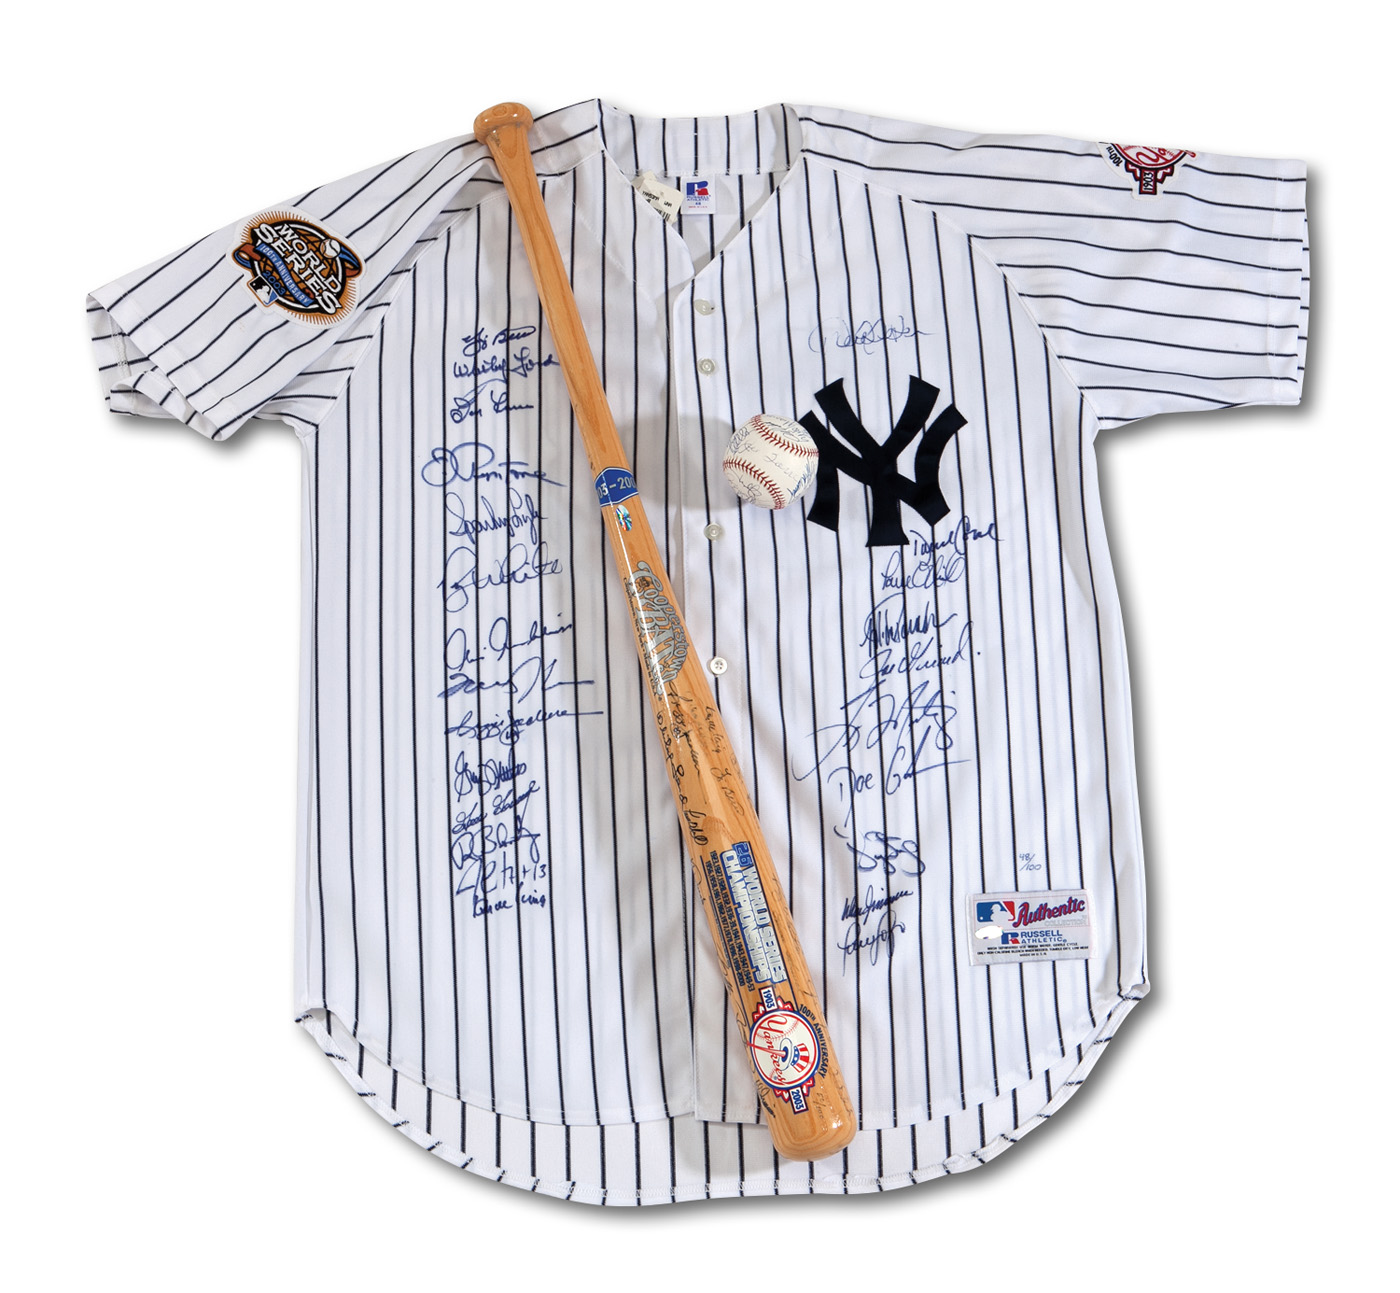 Lot Detail - 2003 Derek Jeter Game Used New York Yankees Home